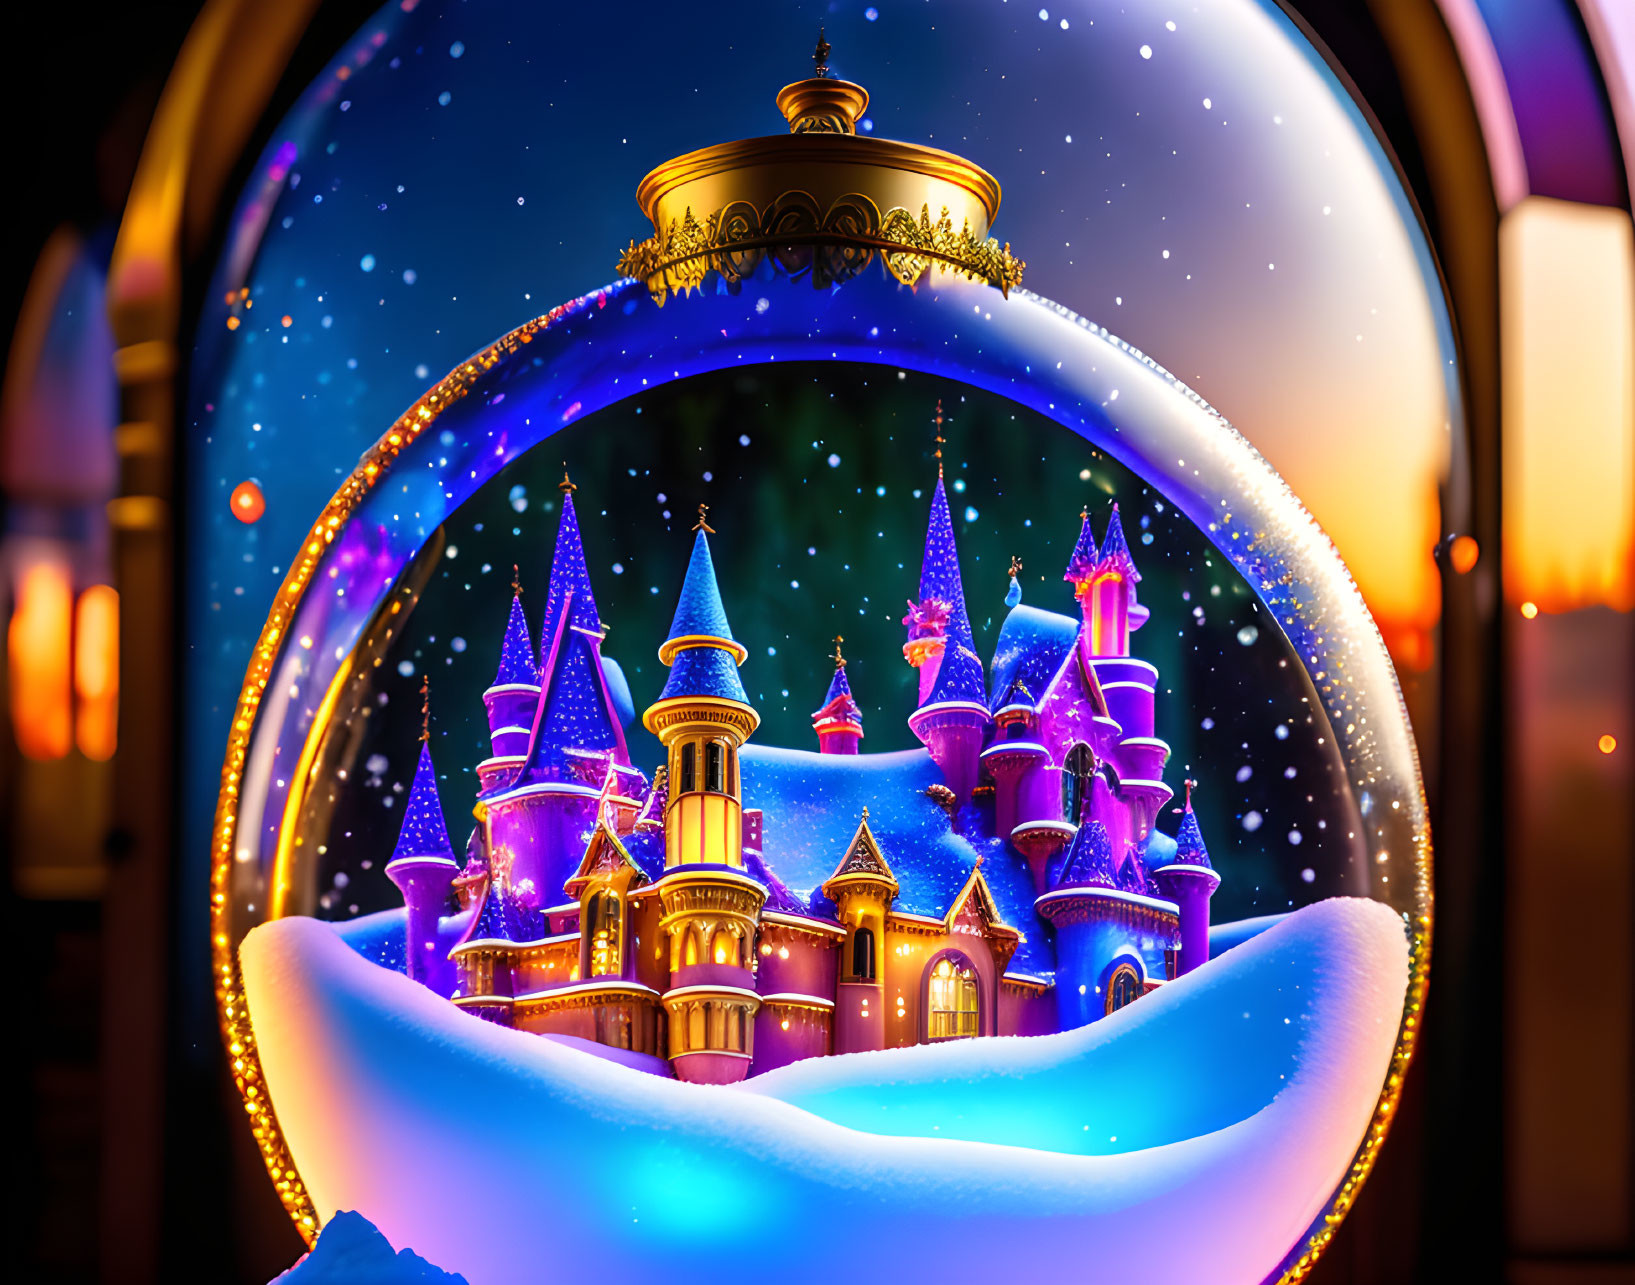 Fantasy world inside a snow globe 